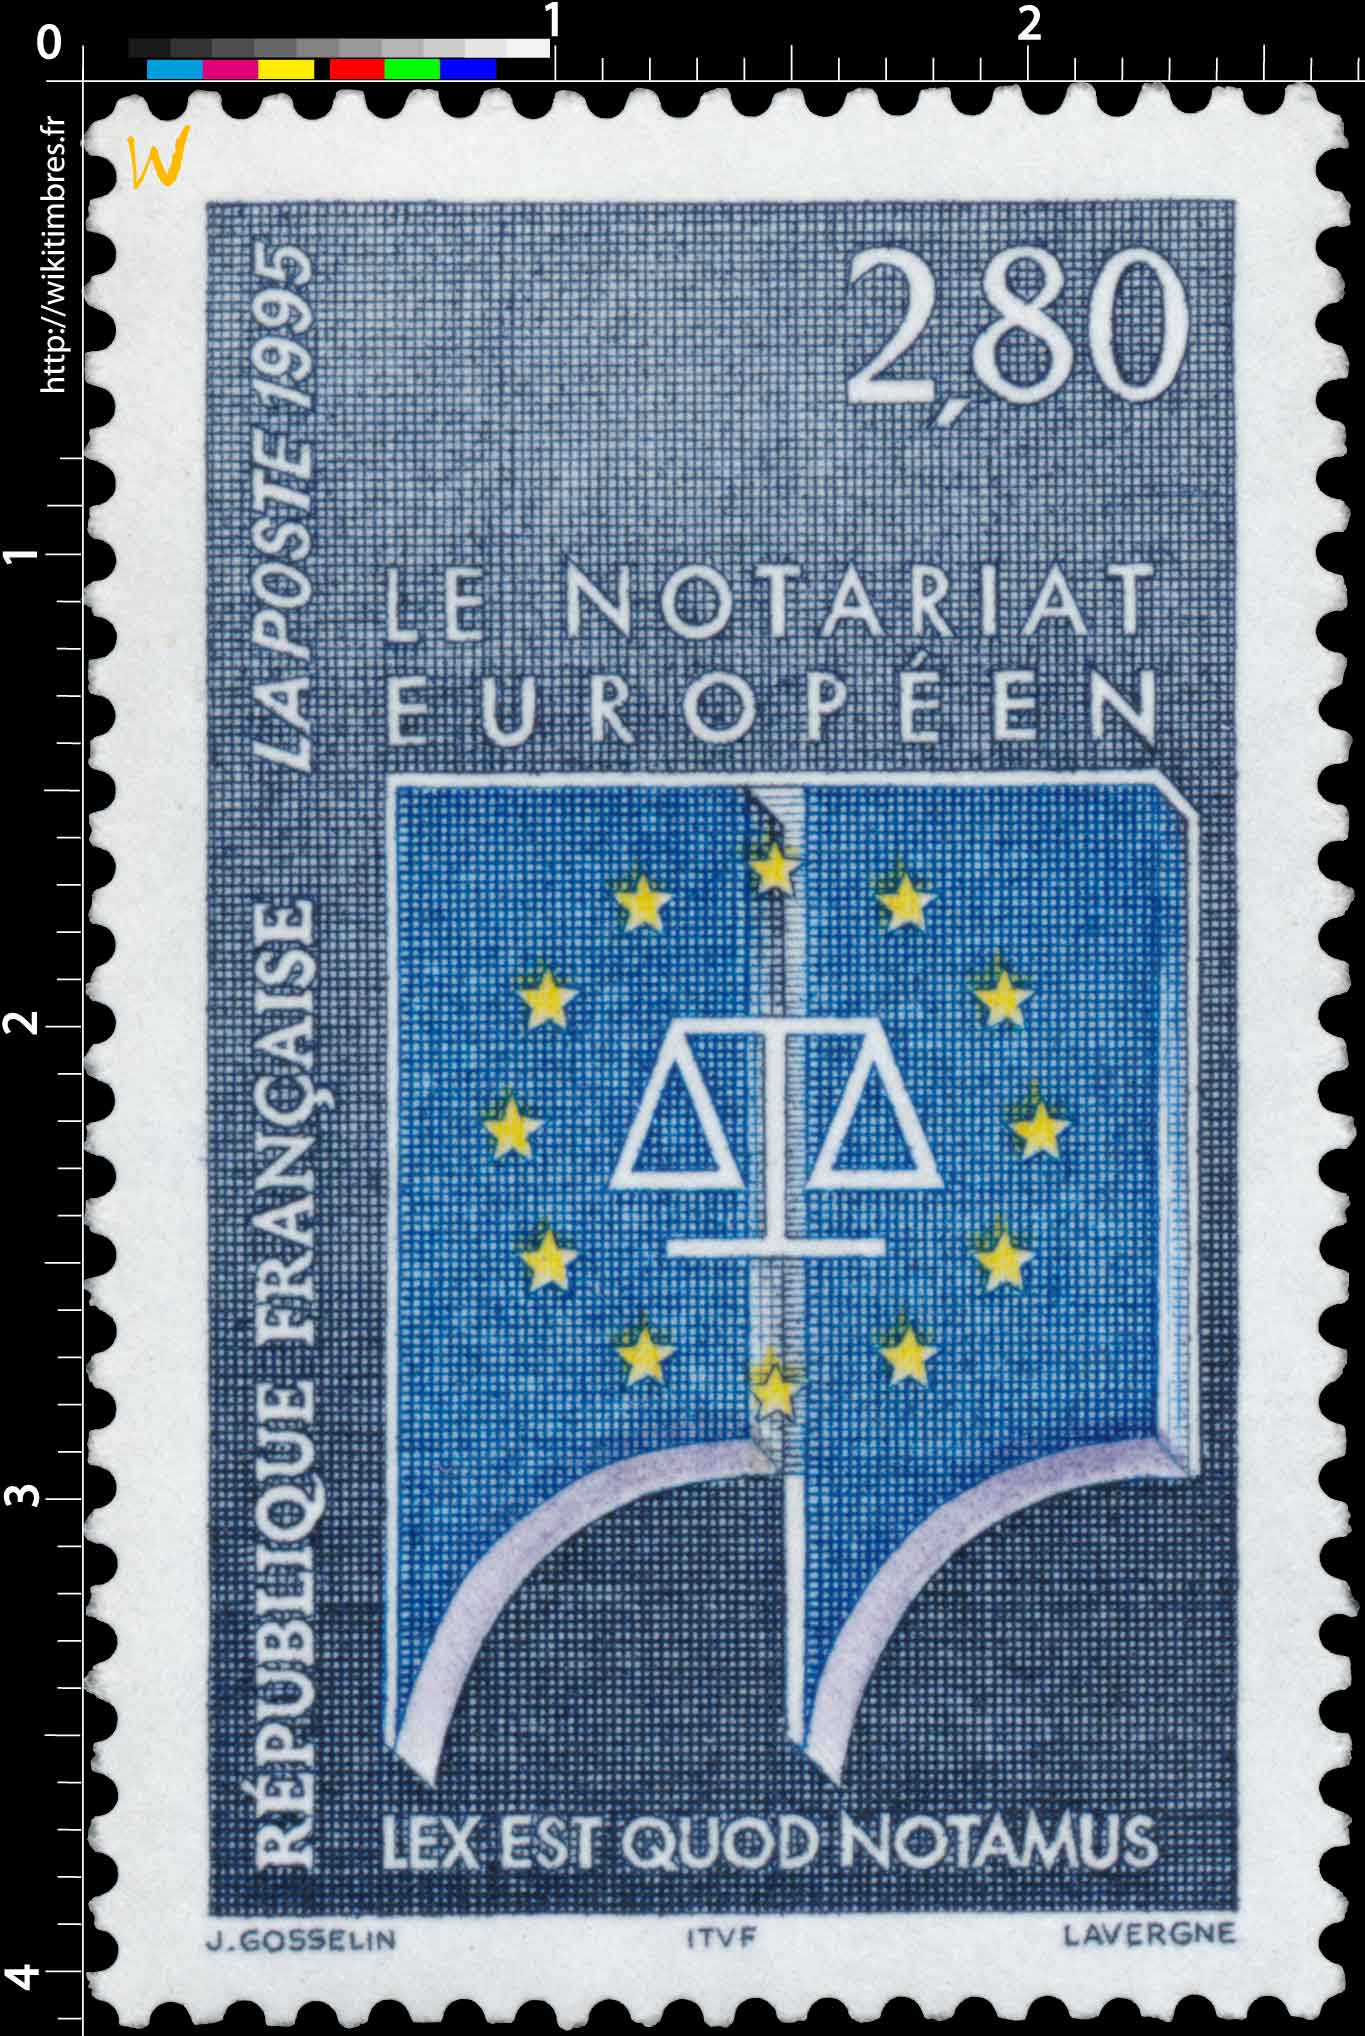 1995 LE NOTARIAT EUROPÉEN LEX EST QUOD NOTAMUS